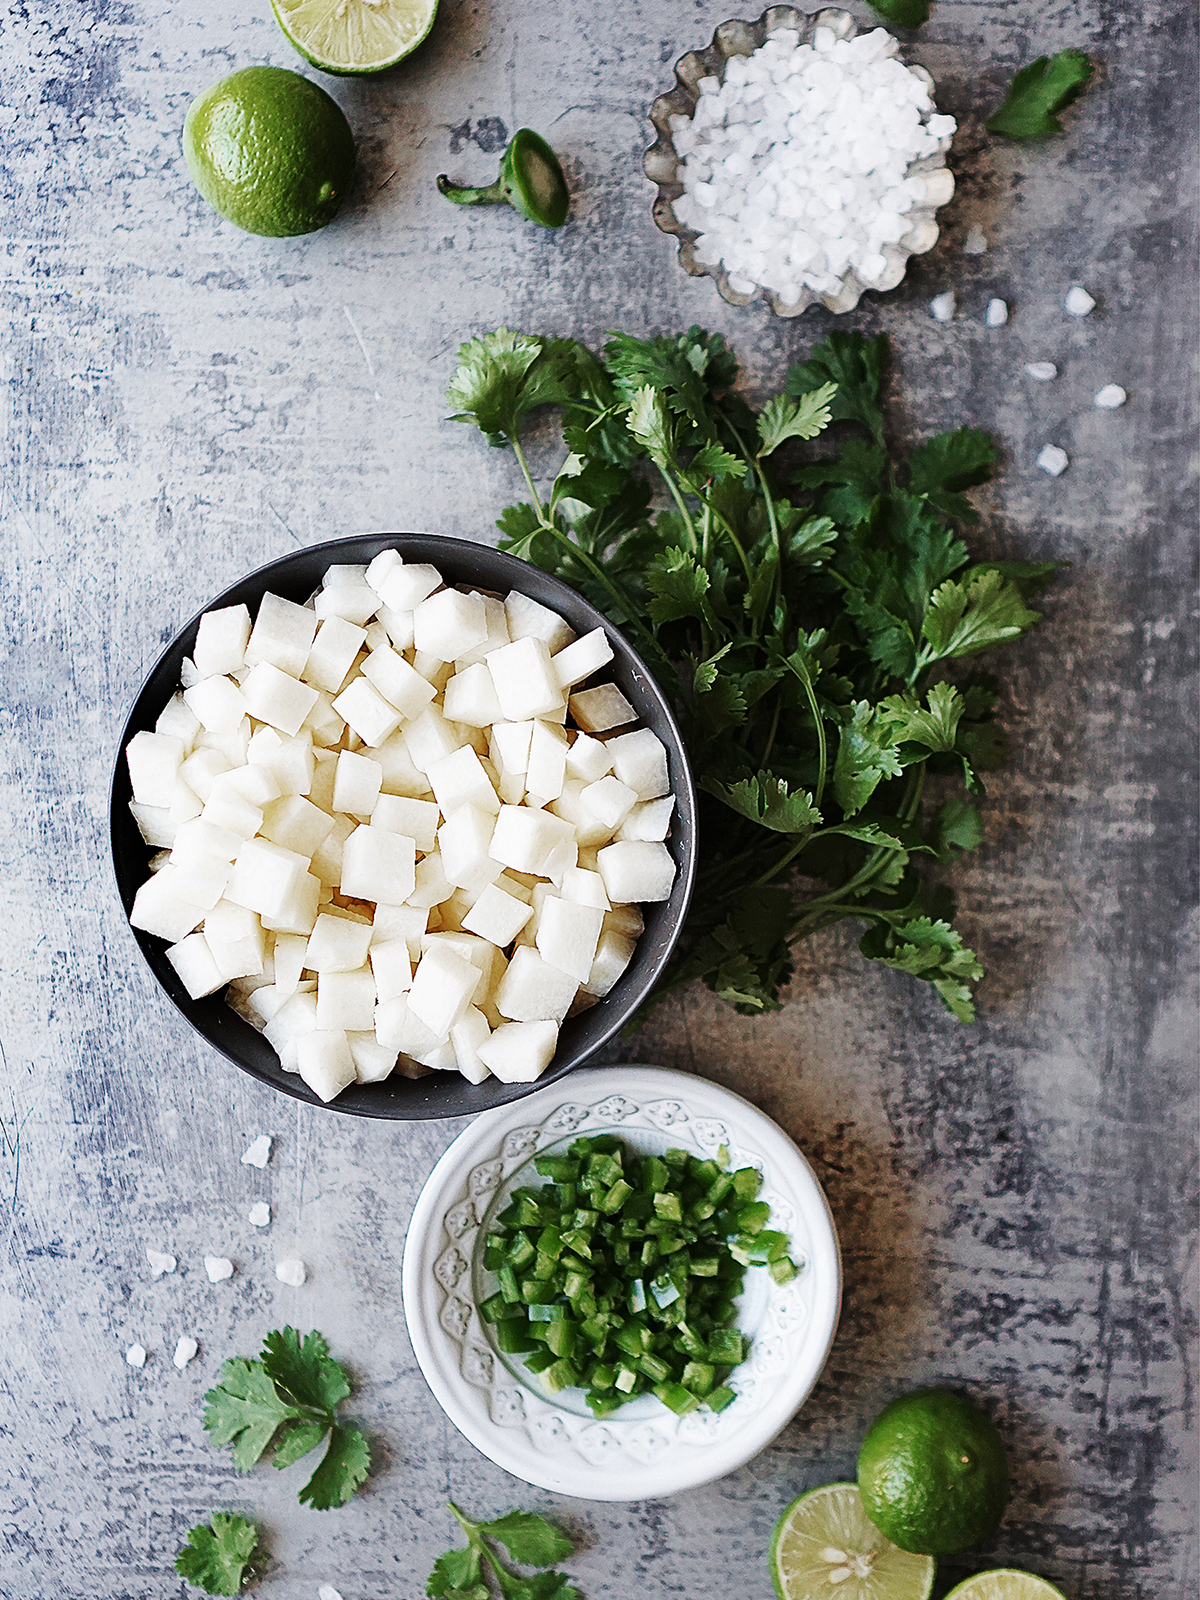 Ingredients in small bowls: jicama chunks, chopped jalapeño, cilantro, salt & limes.